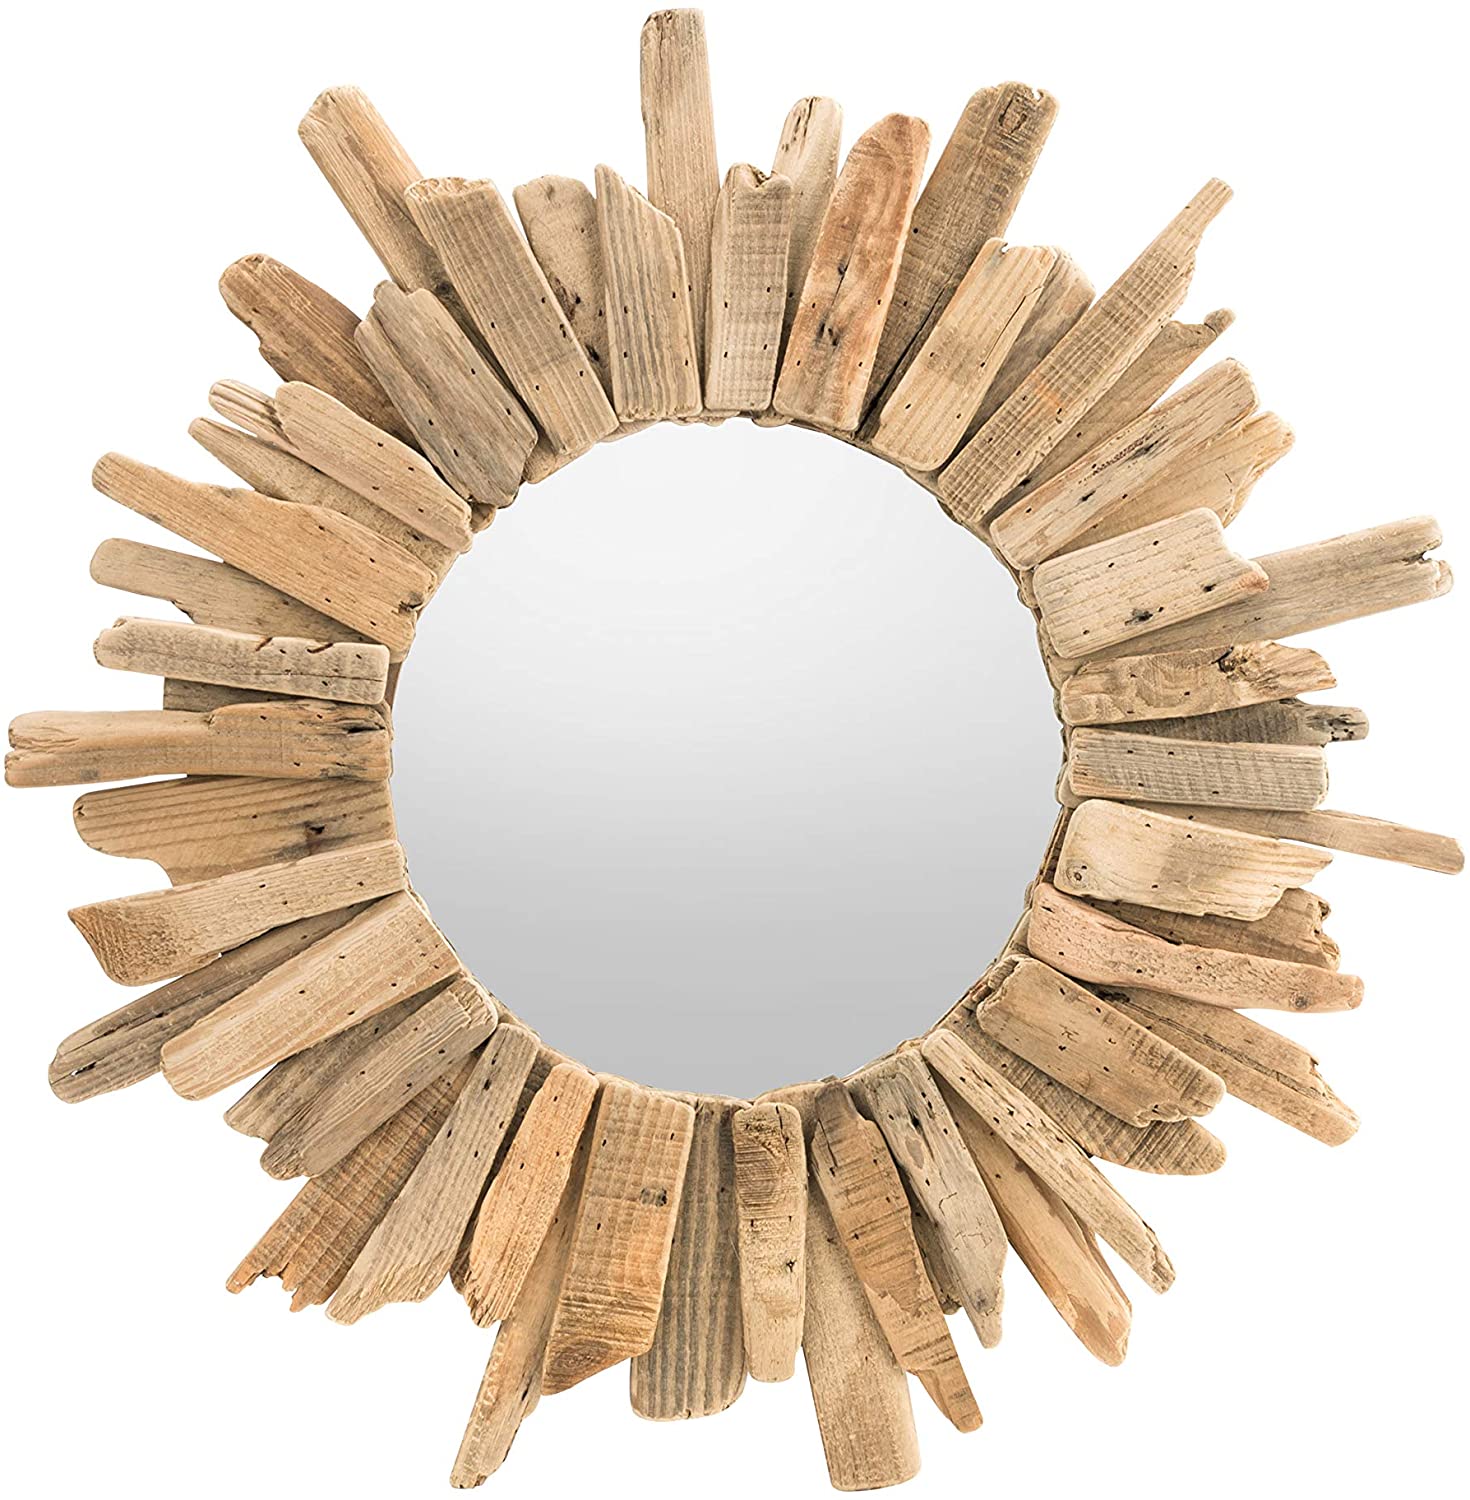 Bring The Beach Home With A Driftwood Mirror